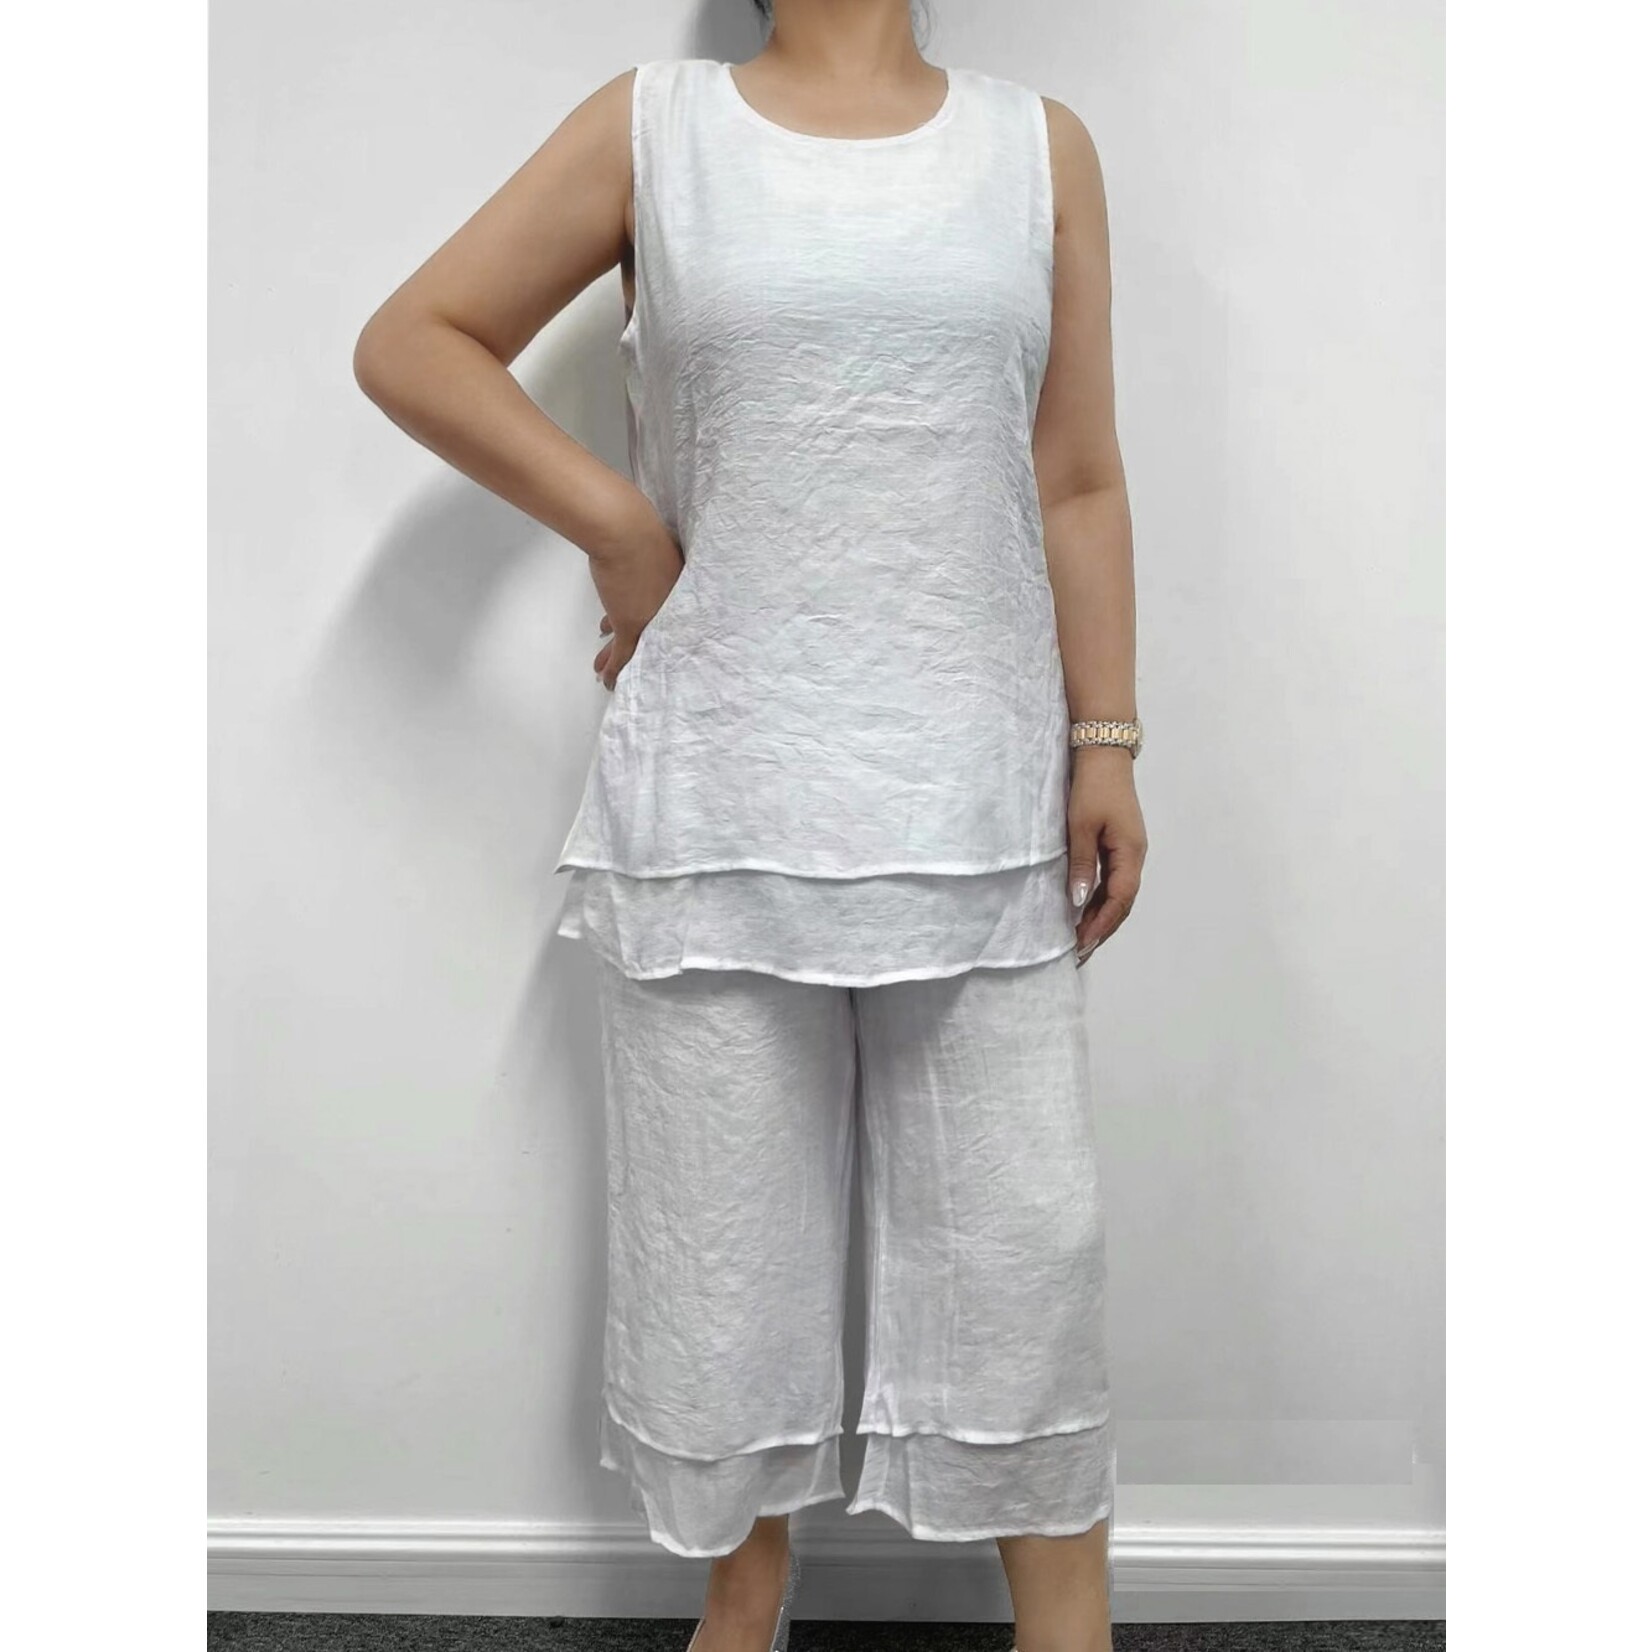 Creations cotton/polyester blend elastic waist capri pant with pockets, capris, pants